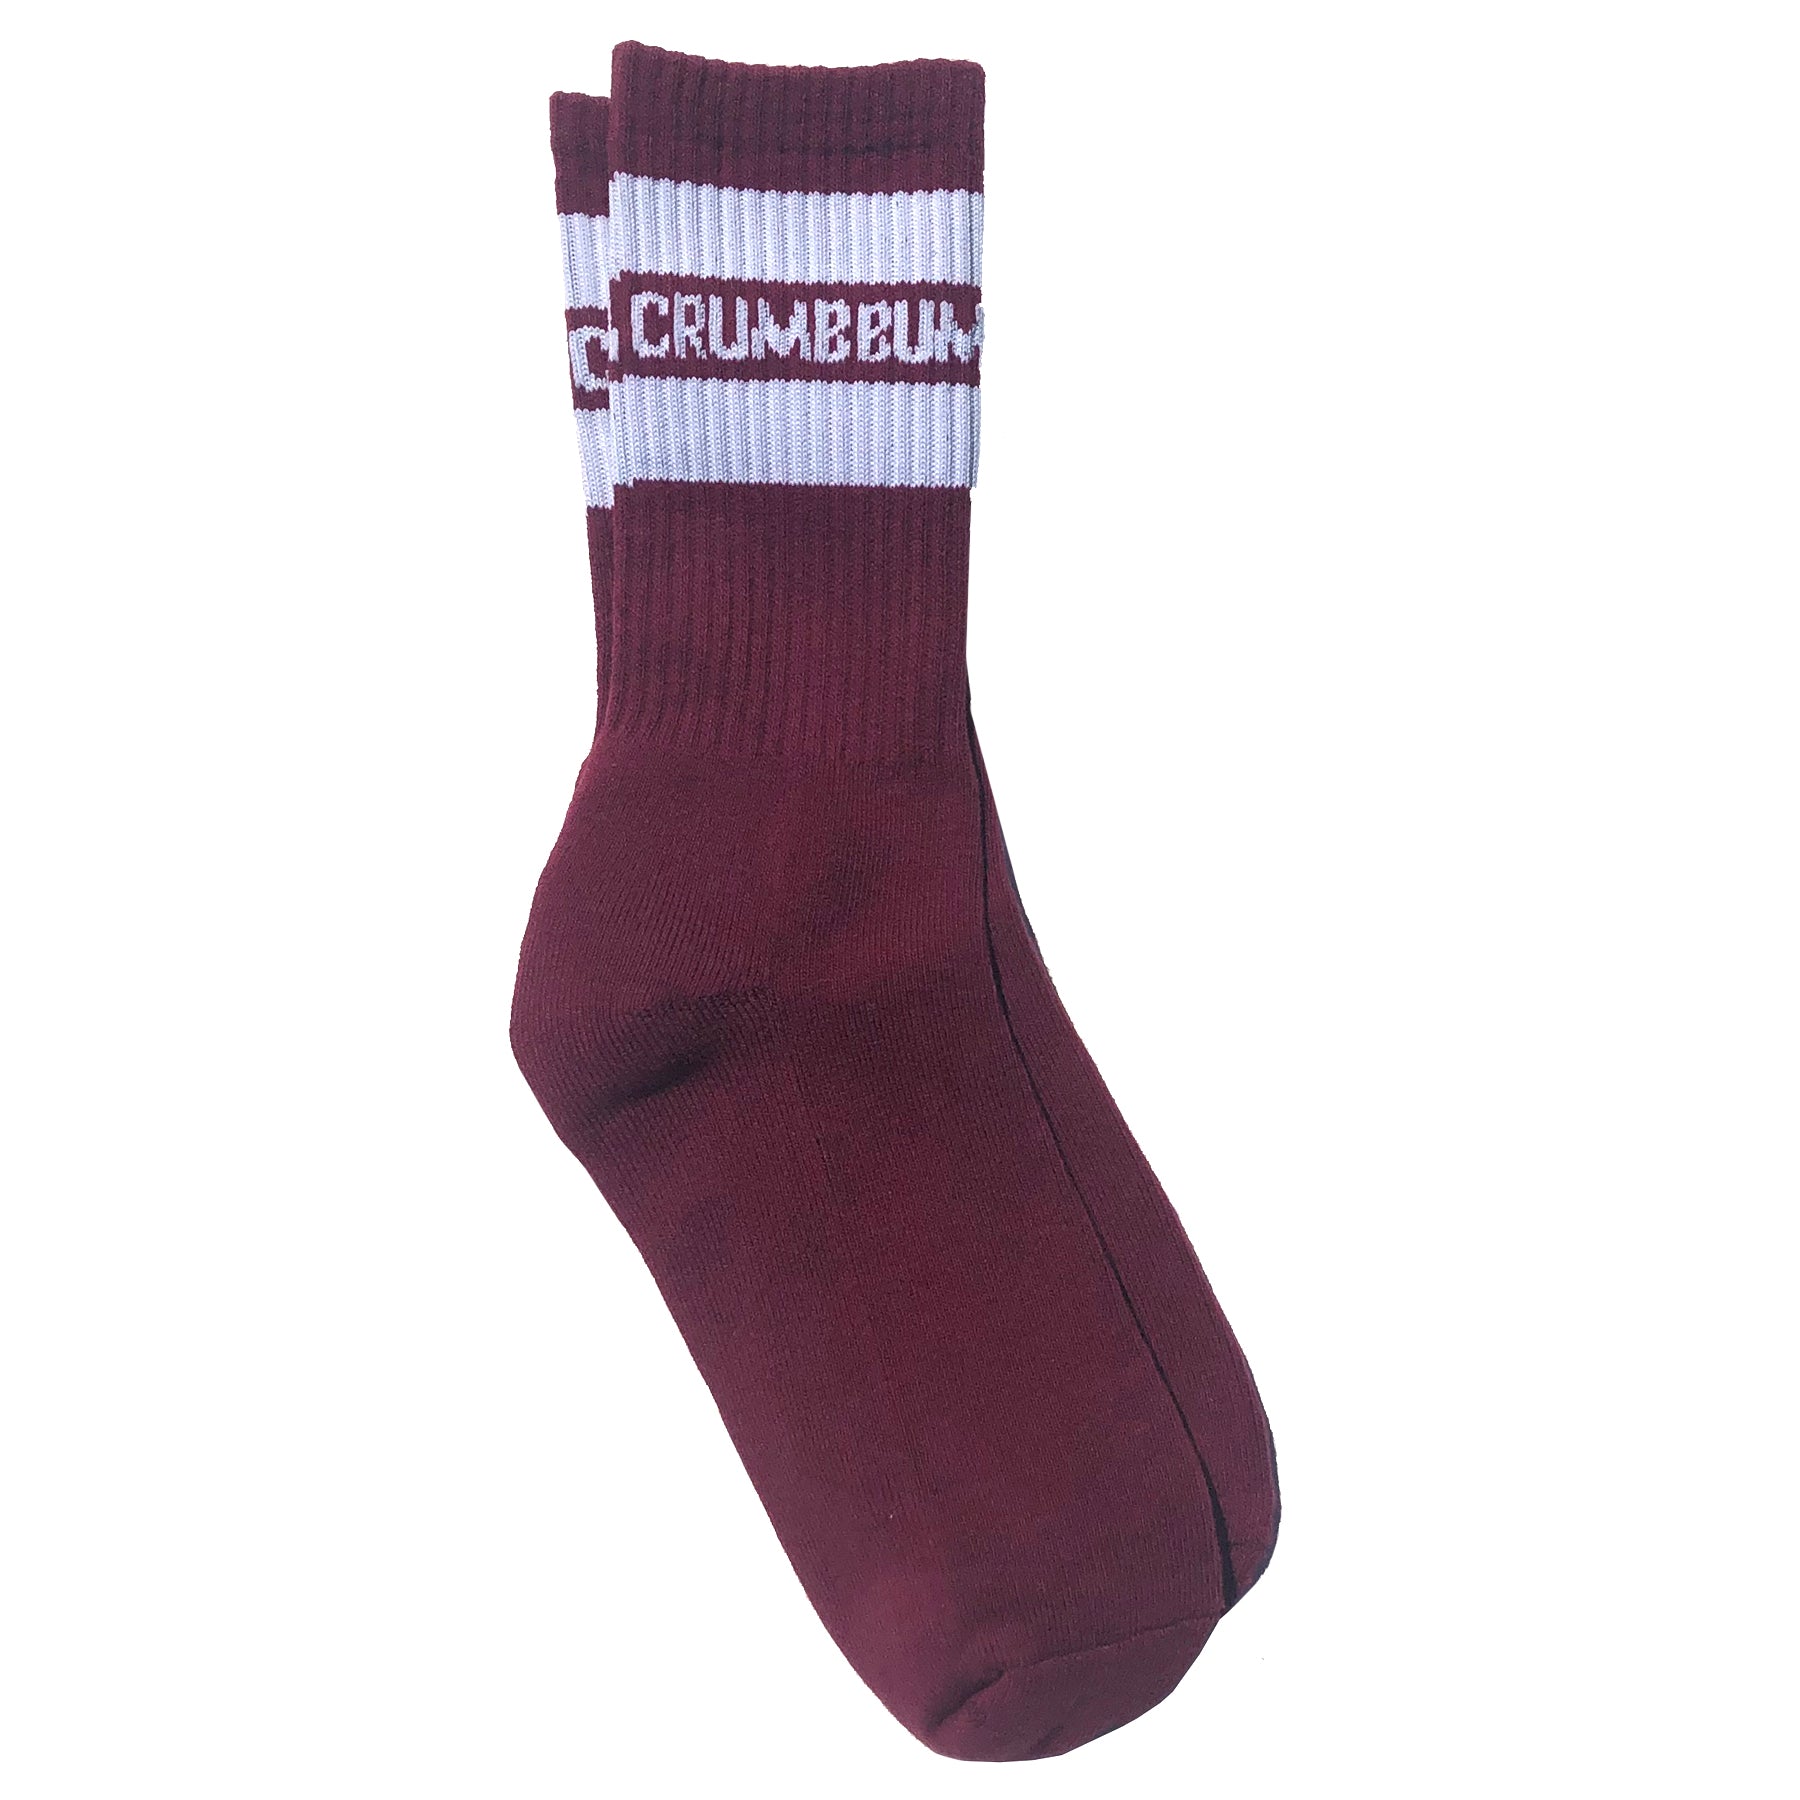 Crumb Bum Maroon Socks